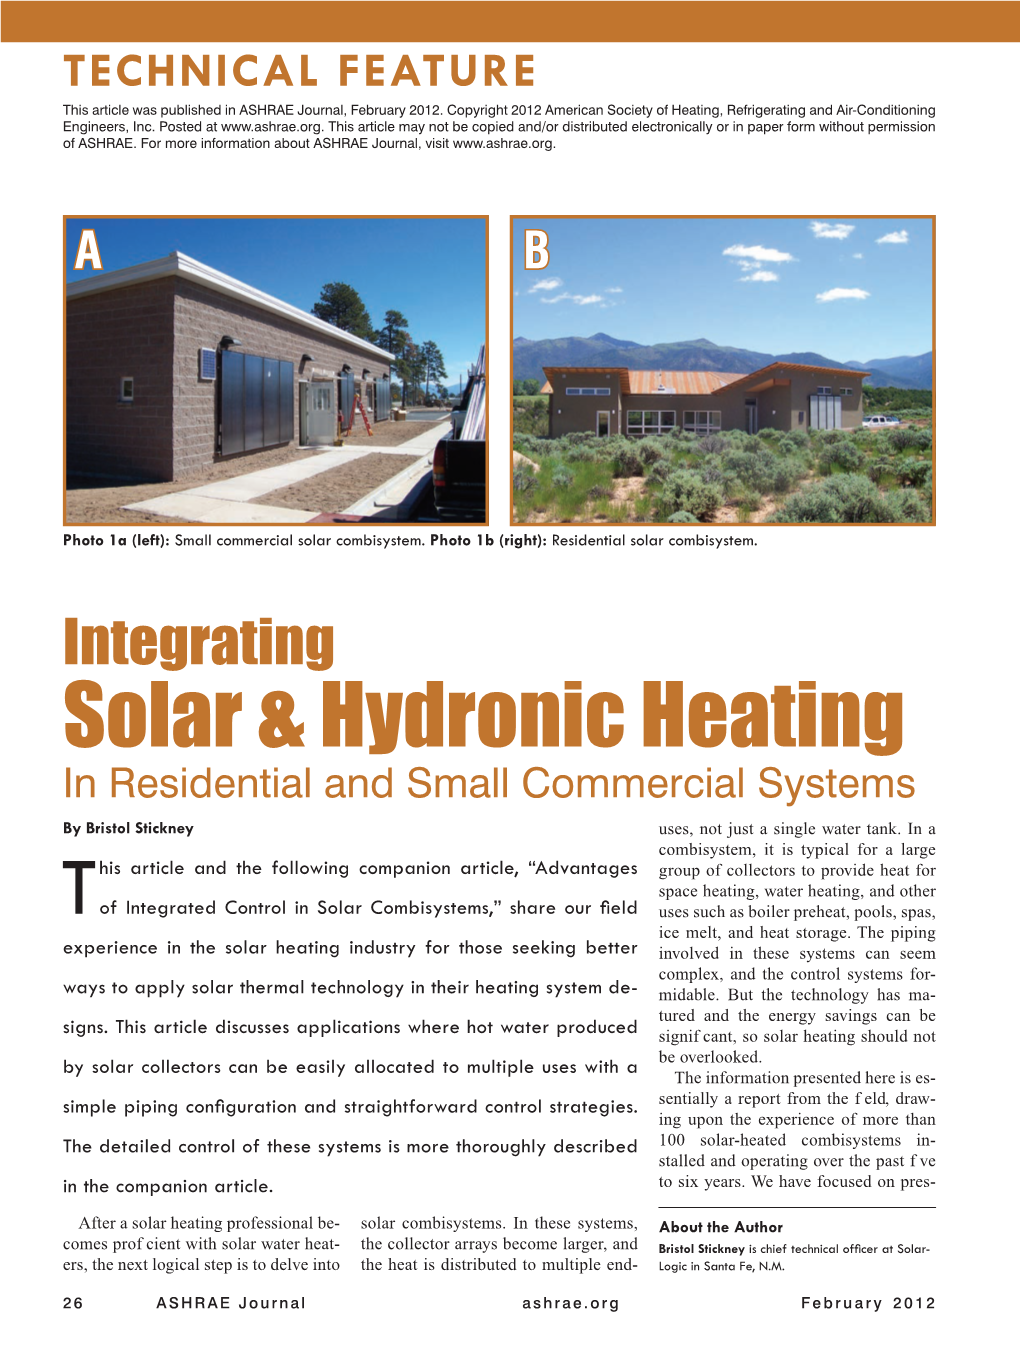 Solar & Hydronic Heating